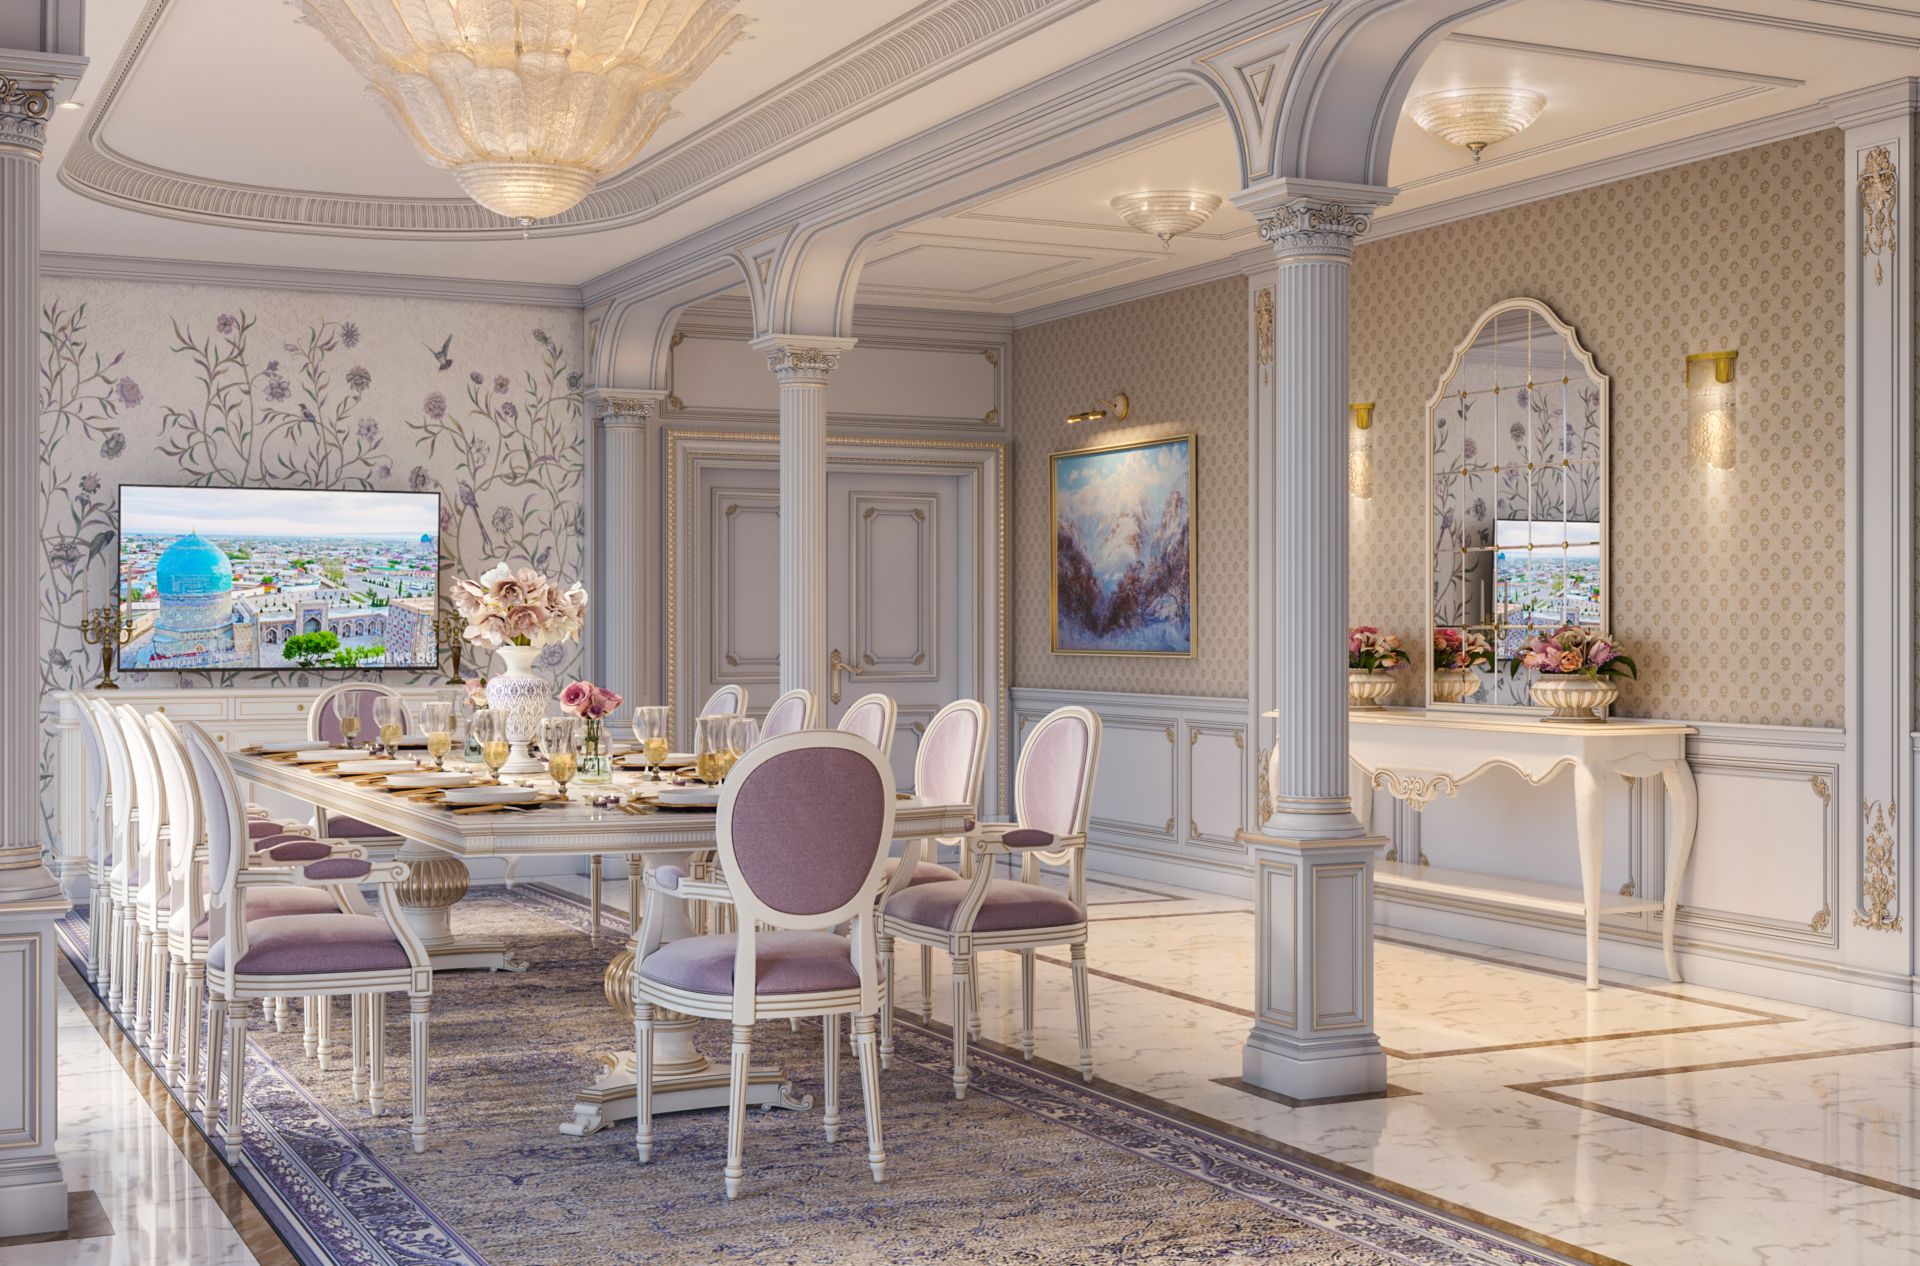 Presidential suite interior in the Hilton hotel, Uzbekistan